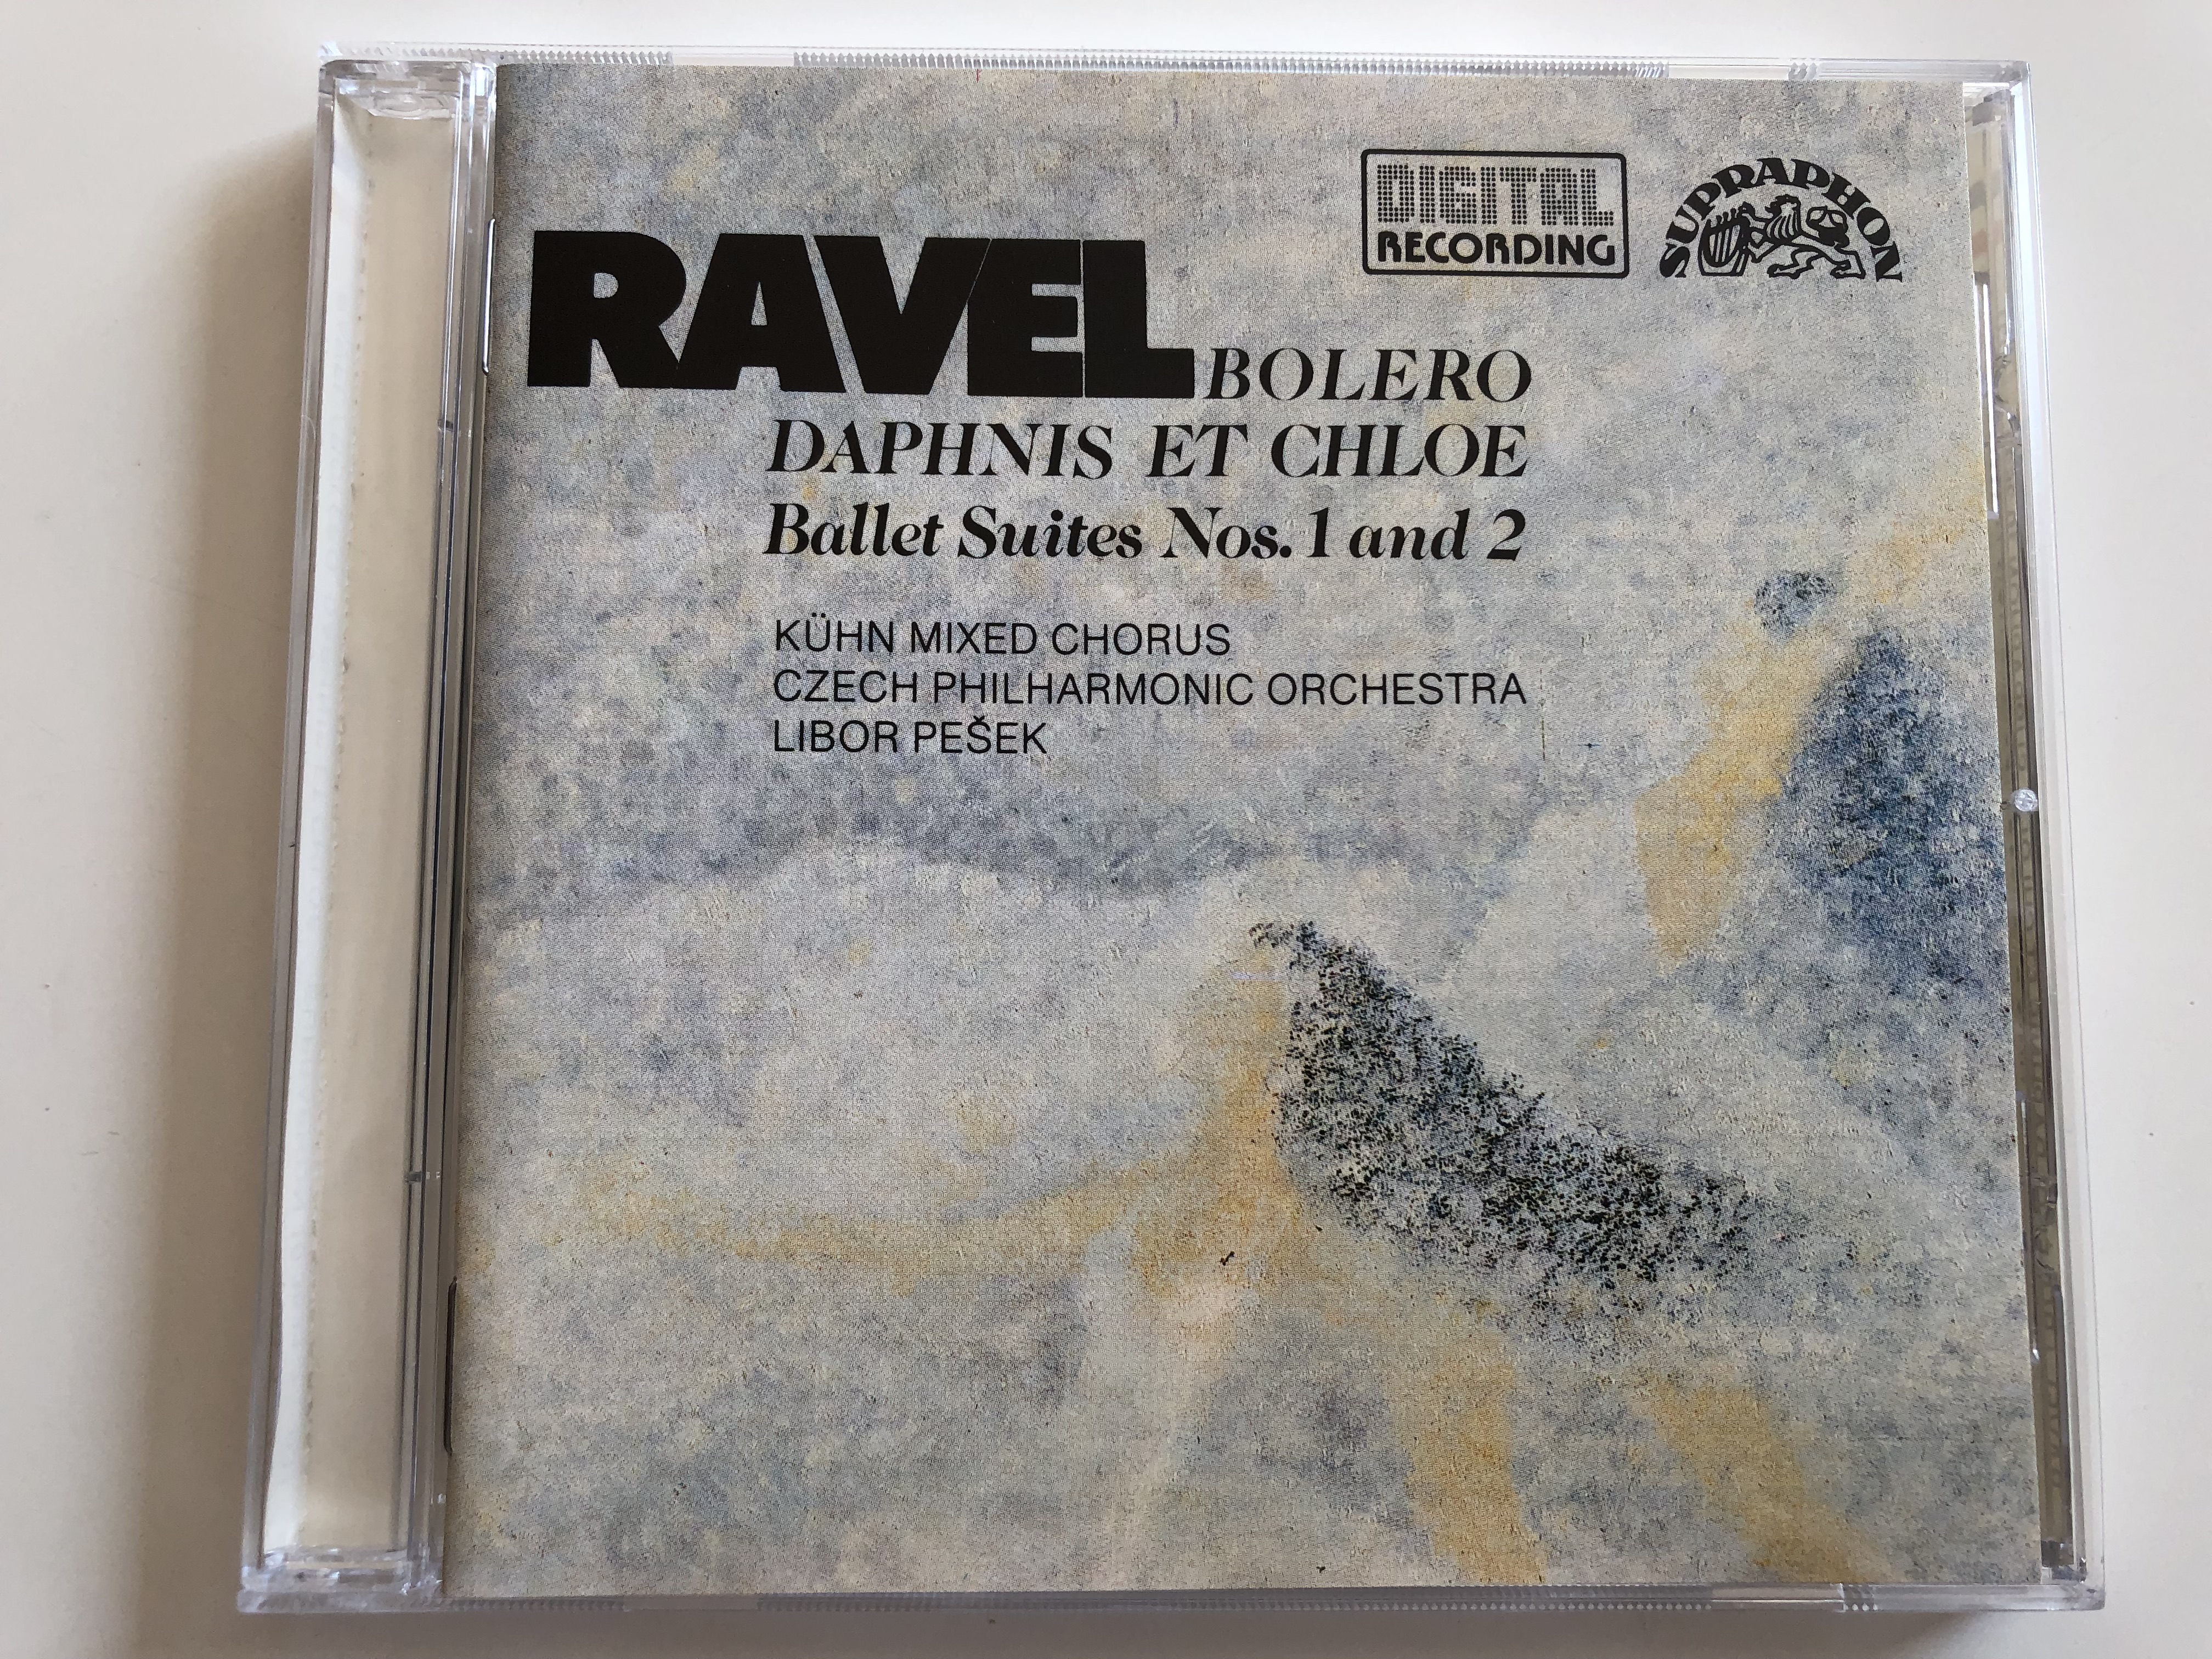 ravel-bolero-daphnis-et-chloe-ballet-suites-nos.-1-and-2-k-hn-mixed-chorus-czech-philharmonic-orchestra-libor-pe-ek-supraphon-audio-cd-10-3633-2-1-.jpg